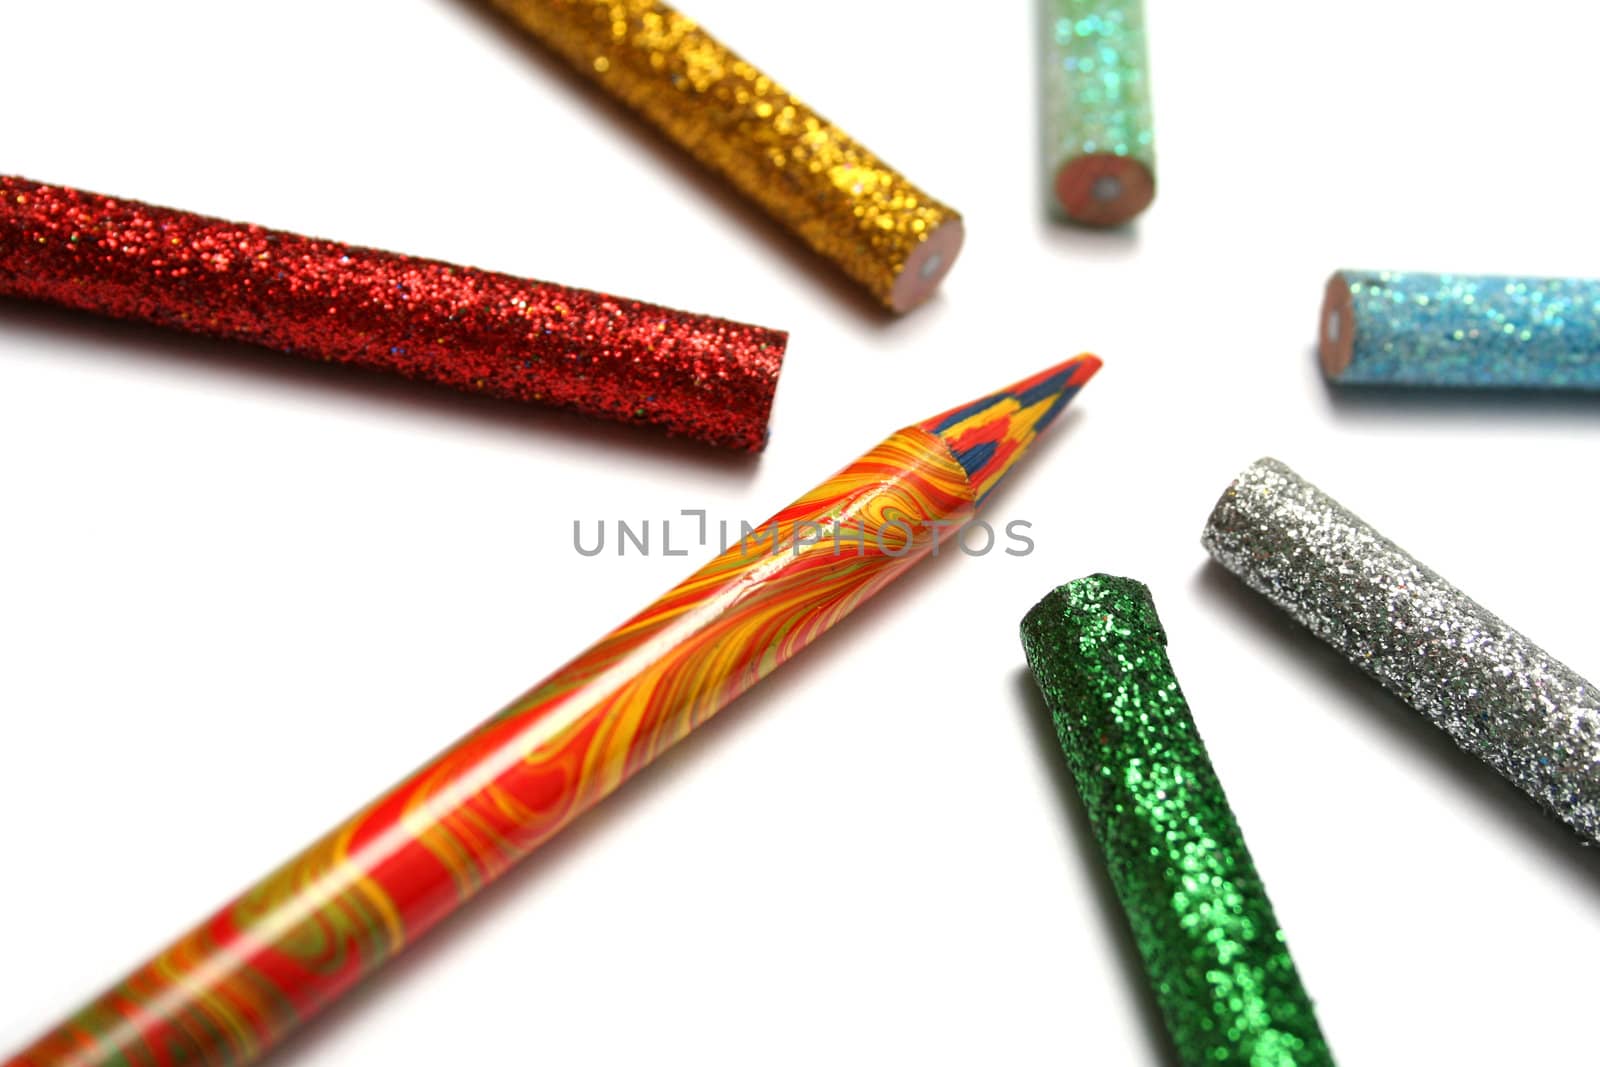 The multi-colour pencil is surrounded by brilliant pencils by parrus